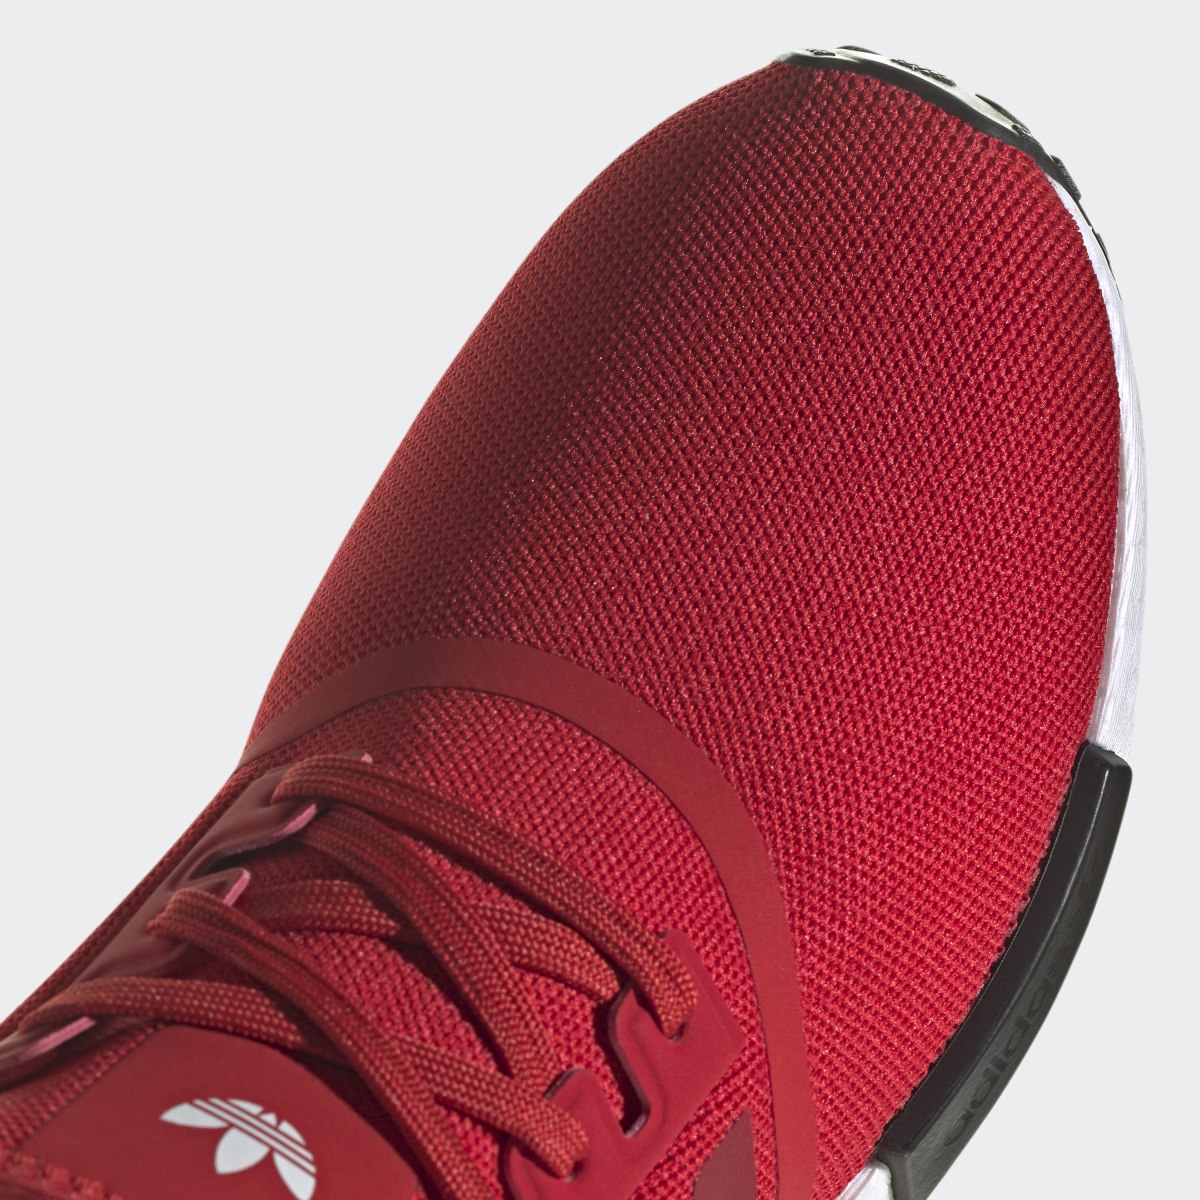 Adidas NMD_R1 Ayakkabı. 8